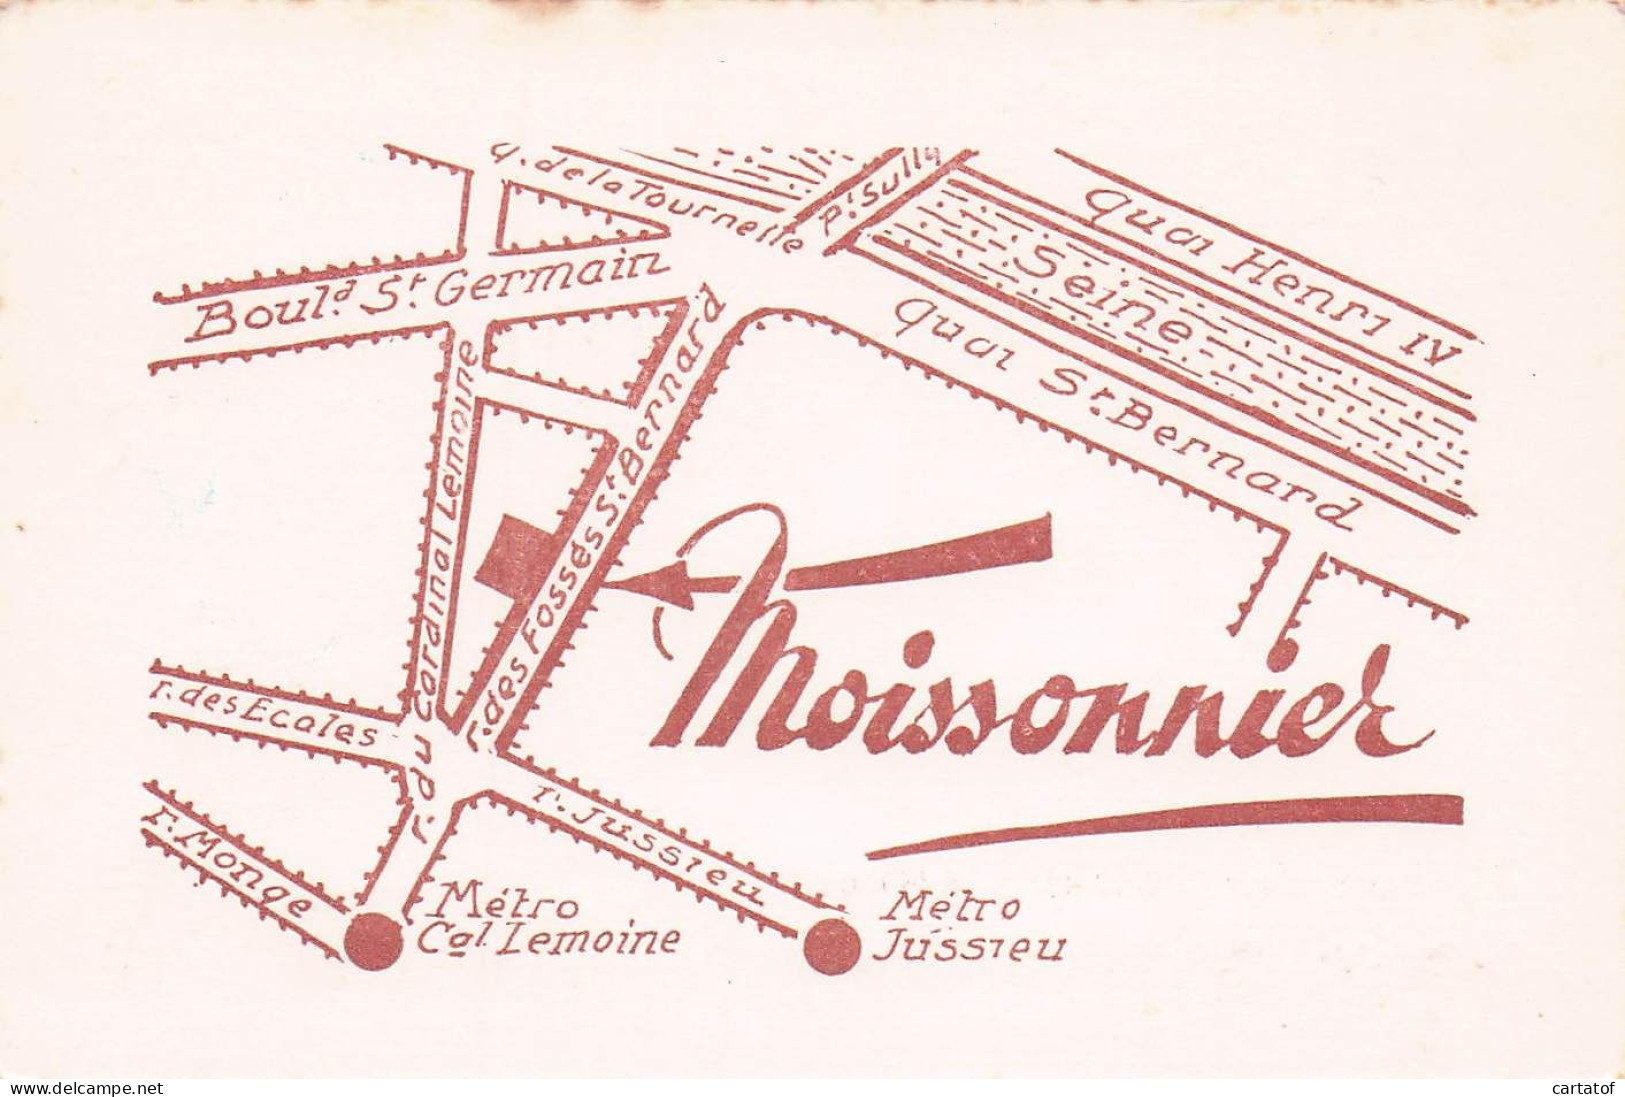 Restaurant MOISSONNIER . PARIS Ve . - Hotelsleutels (kaarten)